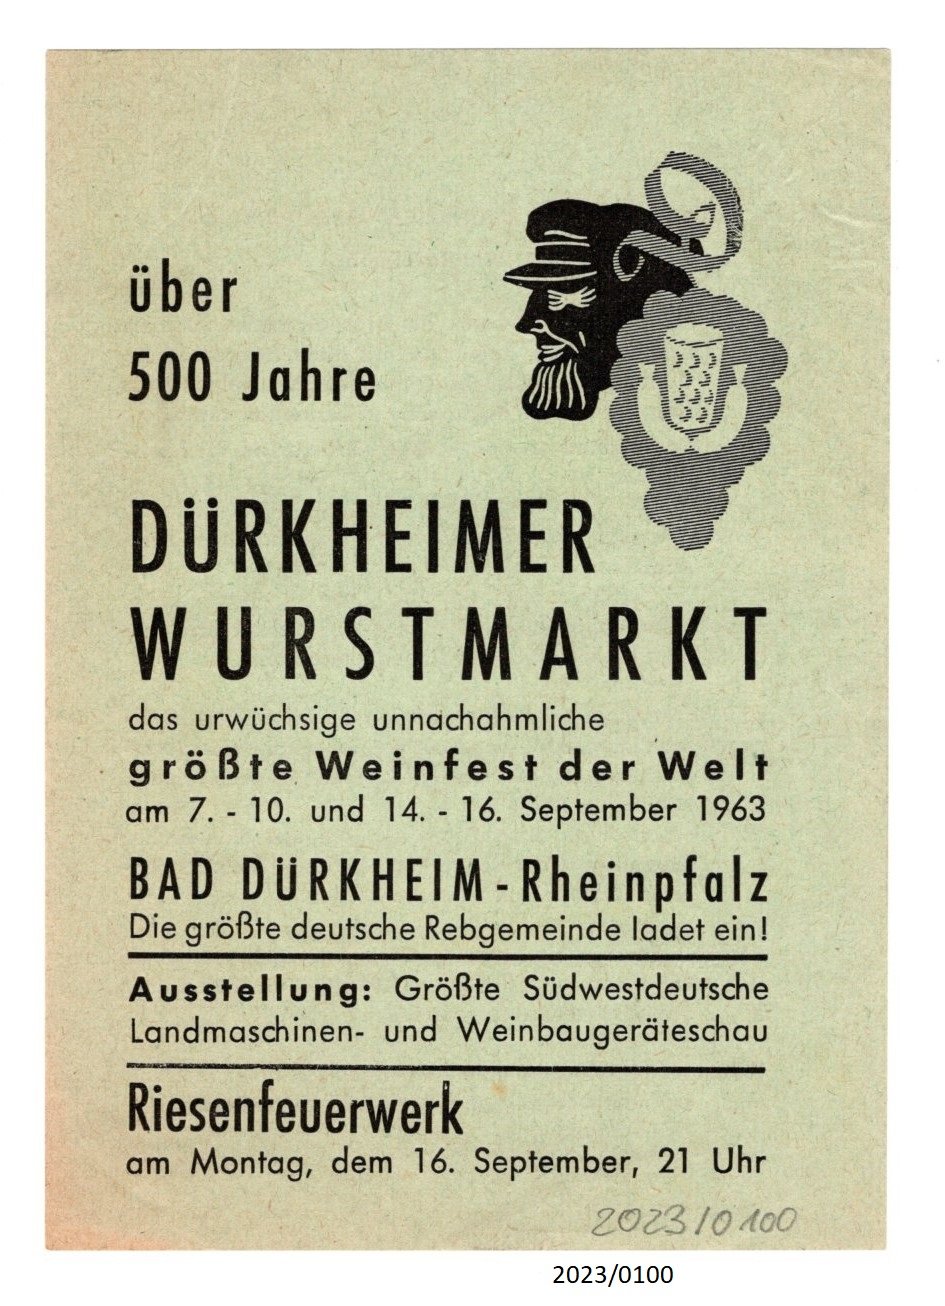 Bad Dürkheimer Wurstmarkt 1963 (Stadtmuseum Bad Dürkheim im Kulturzentrum Haus Catoir CC BY-NC-SA)